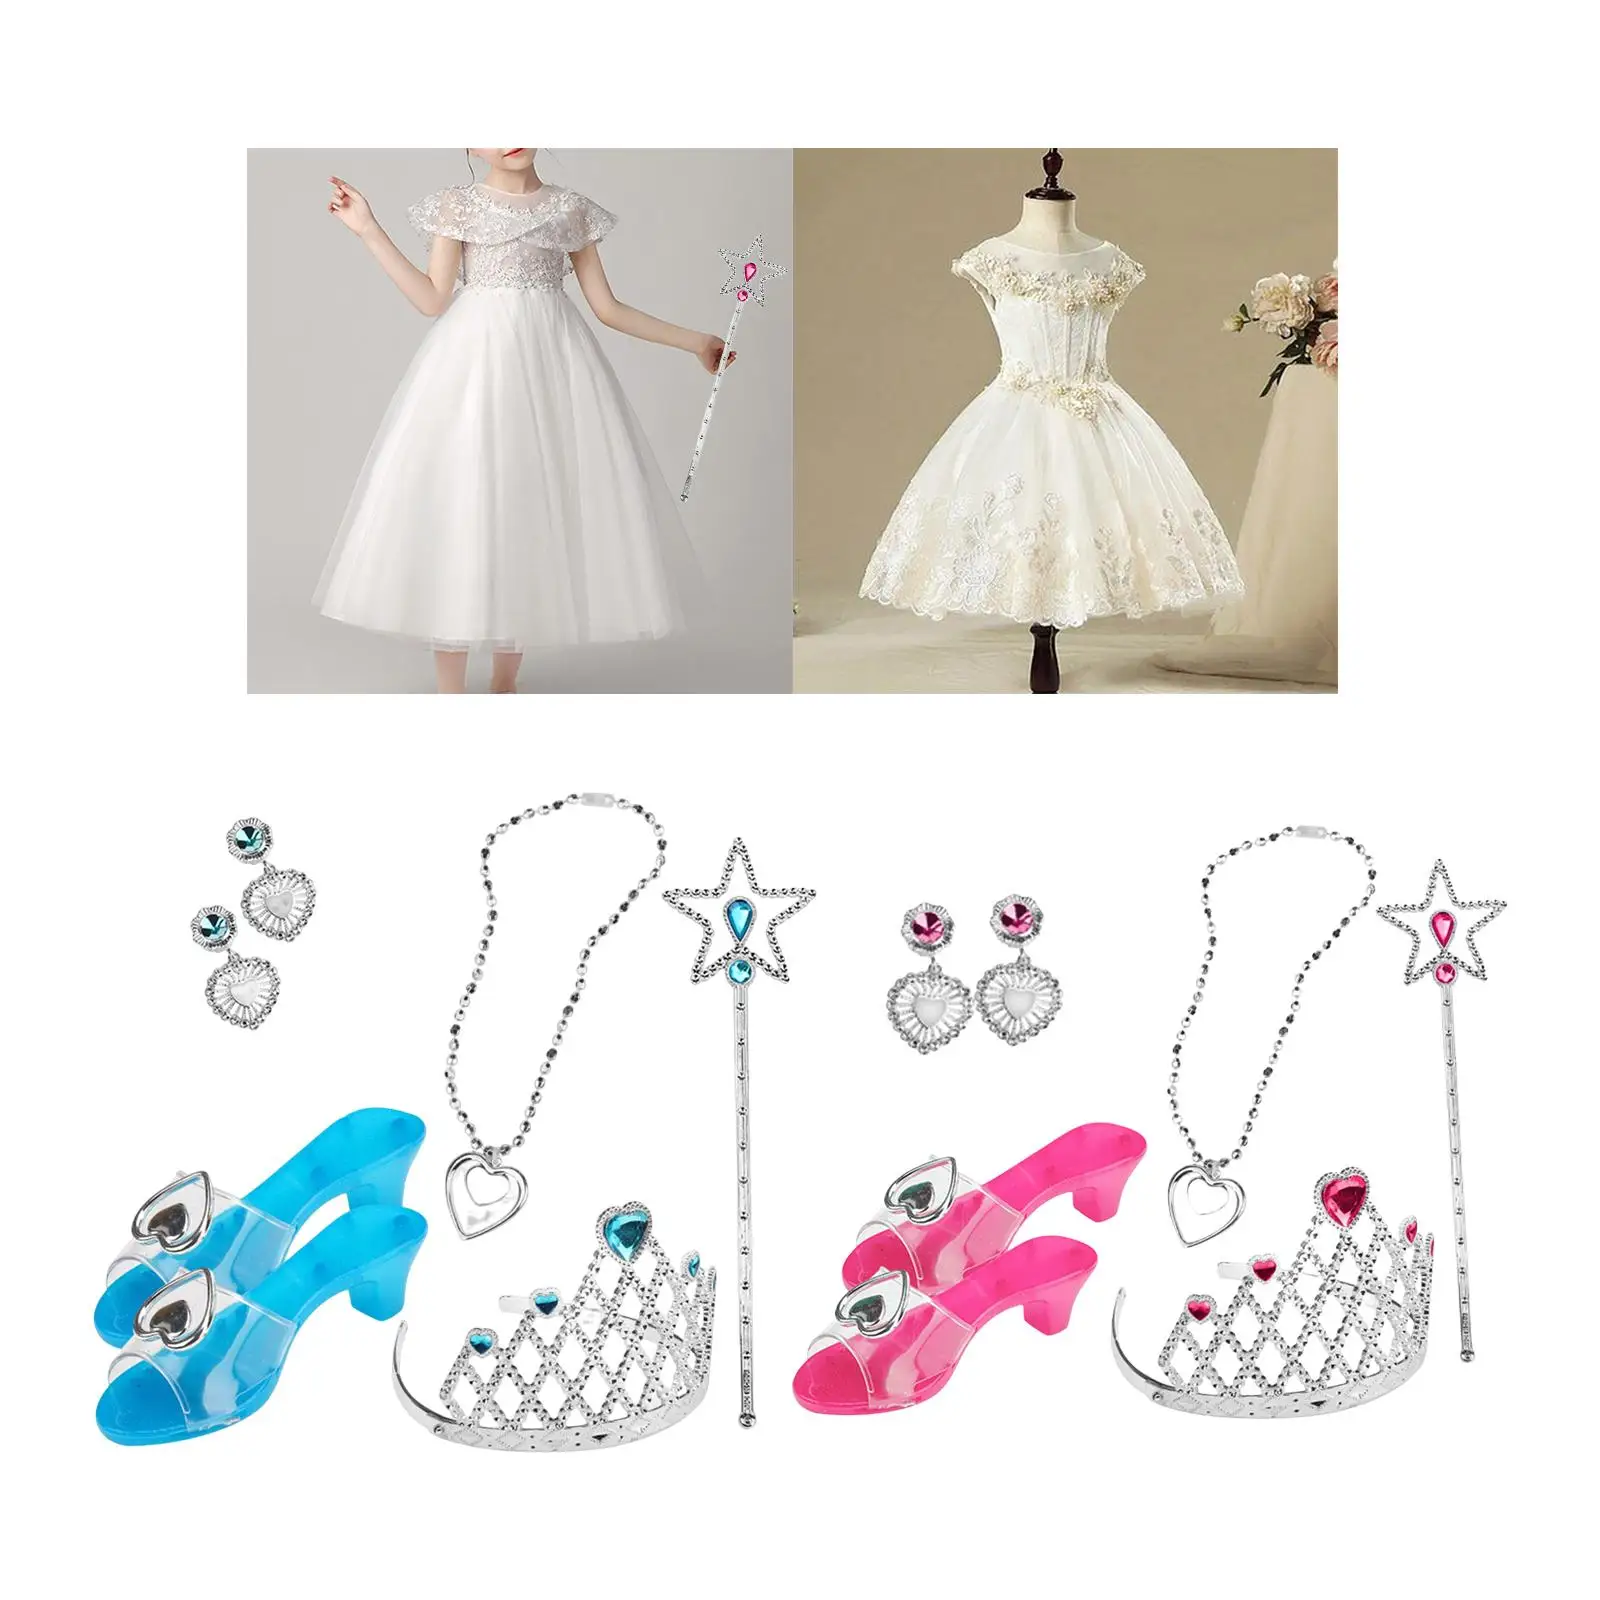 7 Pieces Little Girls Jewelry Toy Girls Pretend Play Set Fashion Accessories